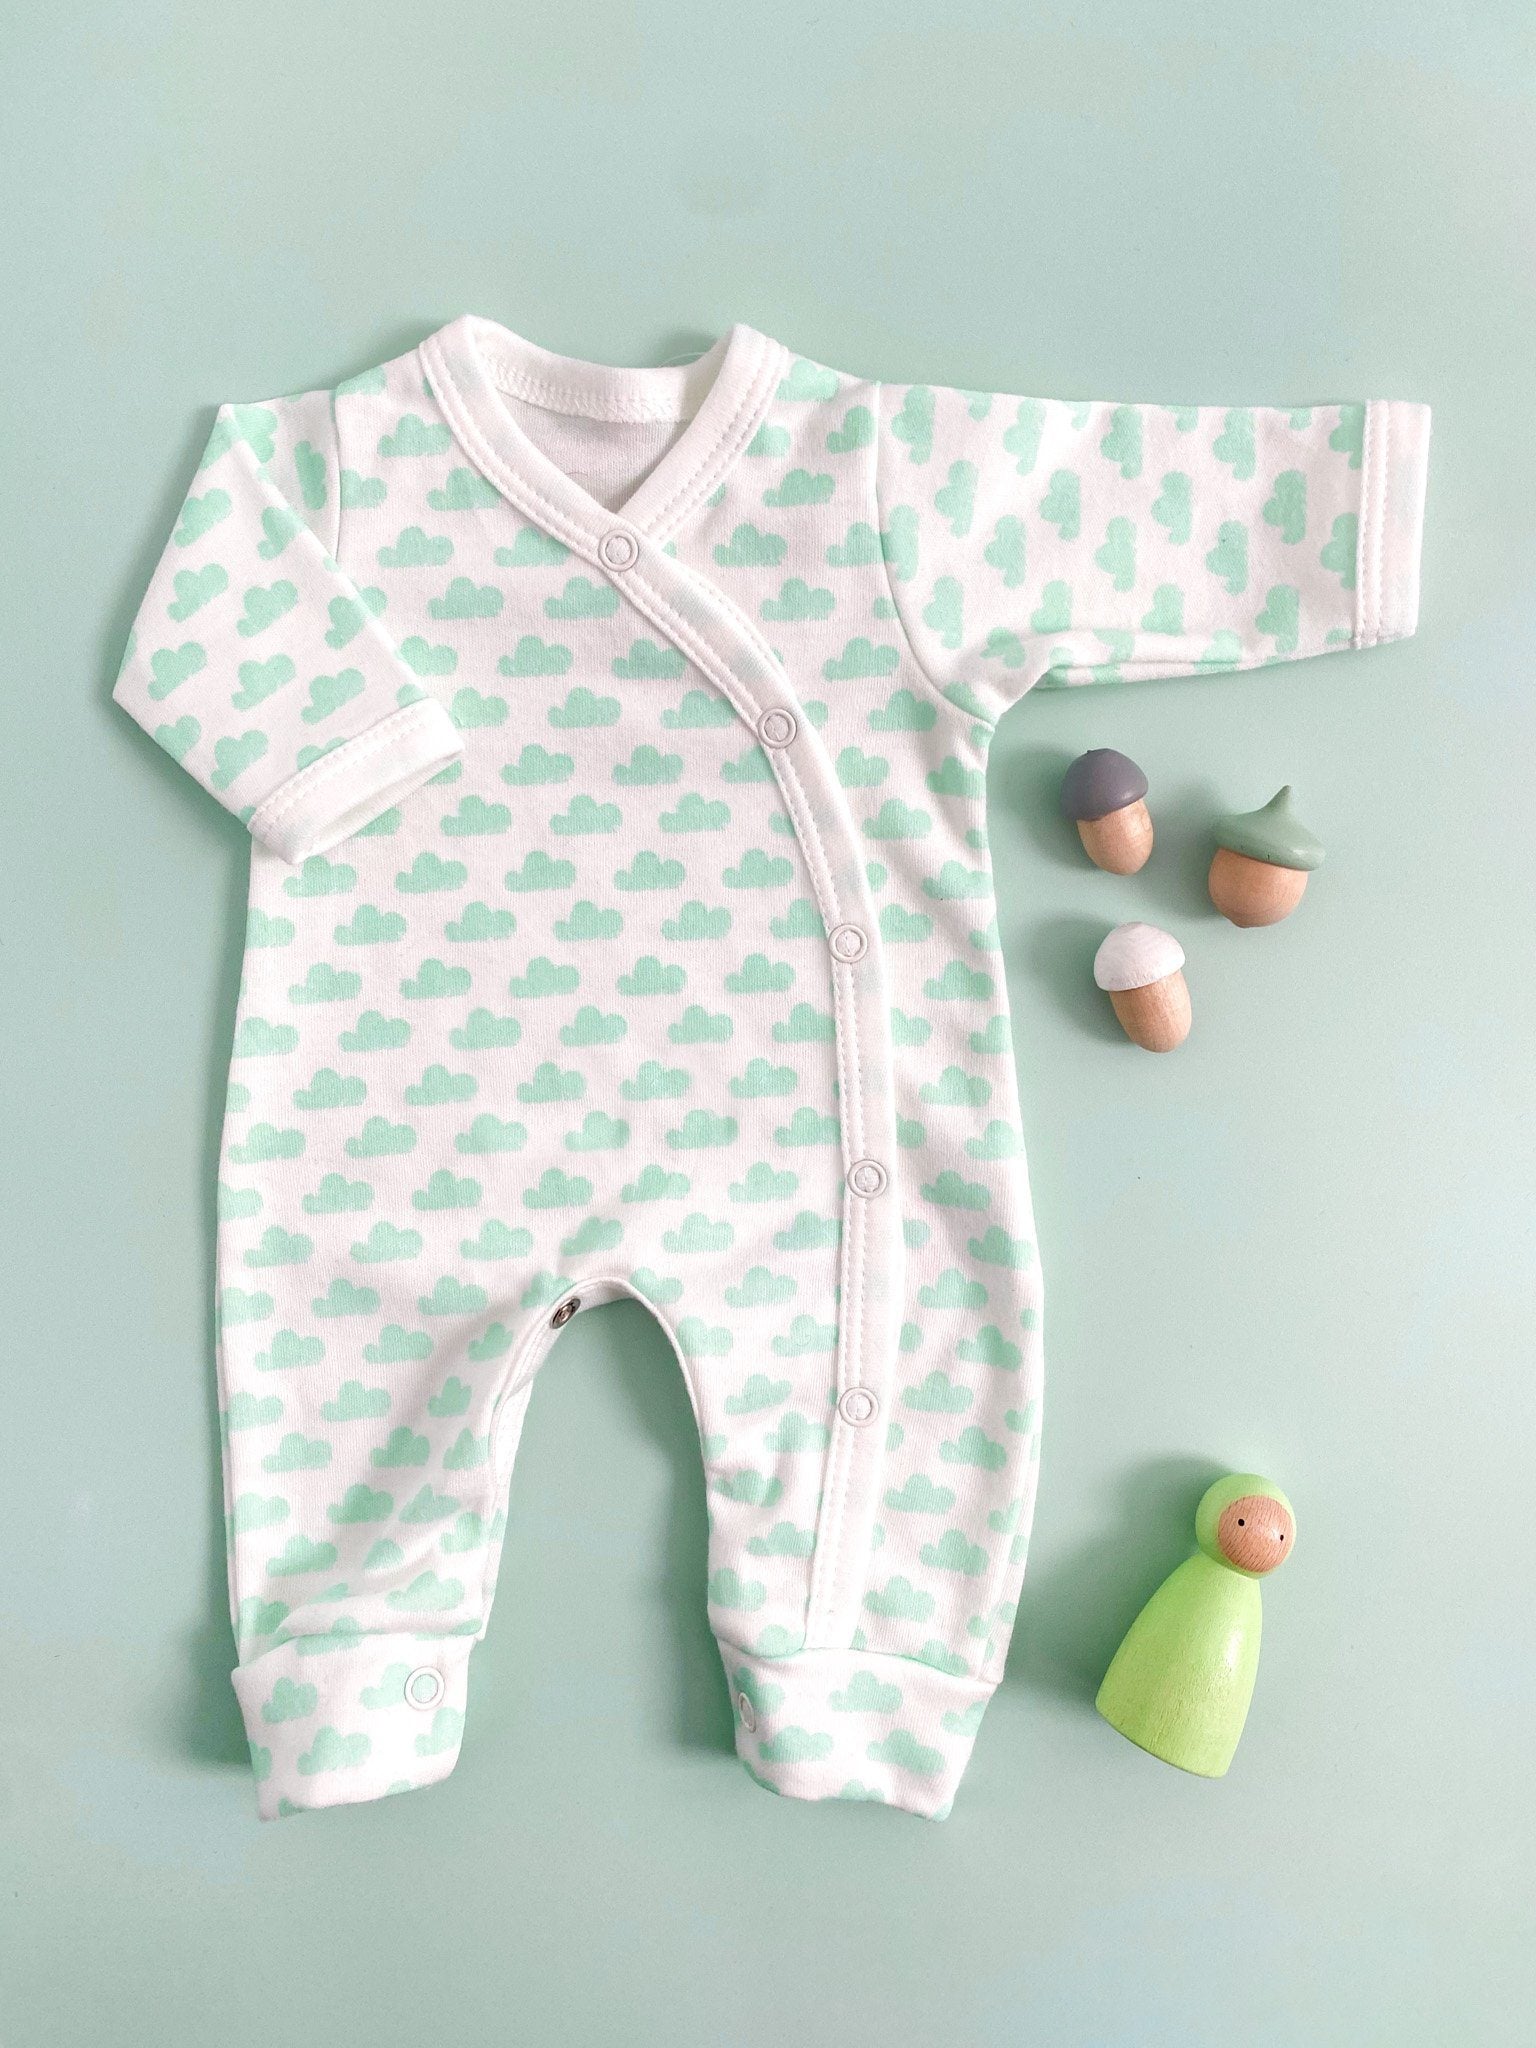 Sleepsuit, Mint Cloud, Premium 100% Organic Cotton Sleepsuit / Babygrow Tiny & Small 